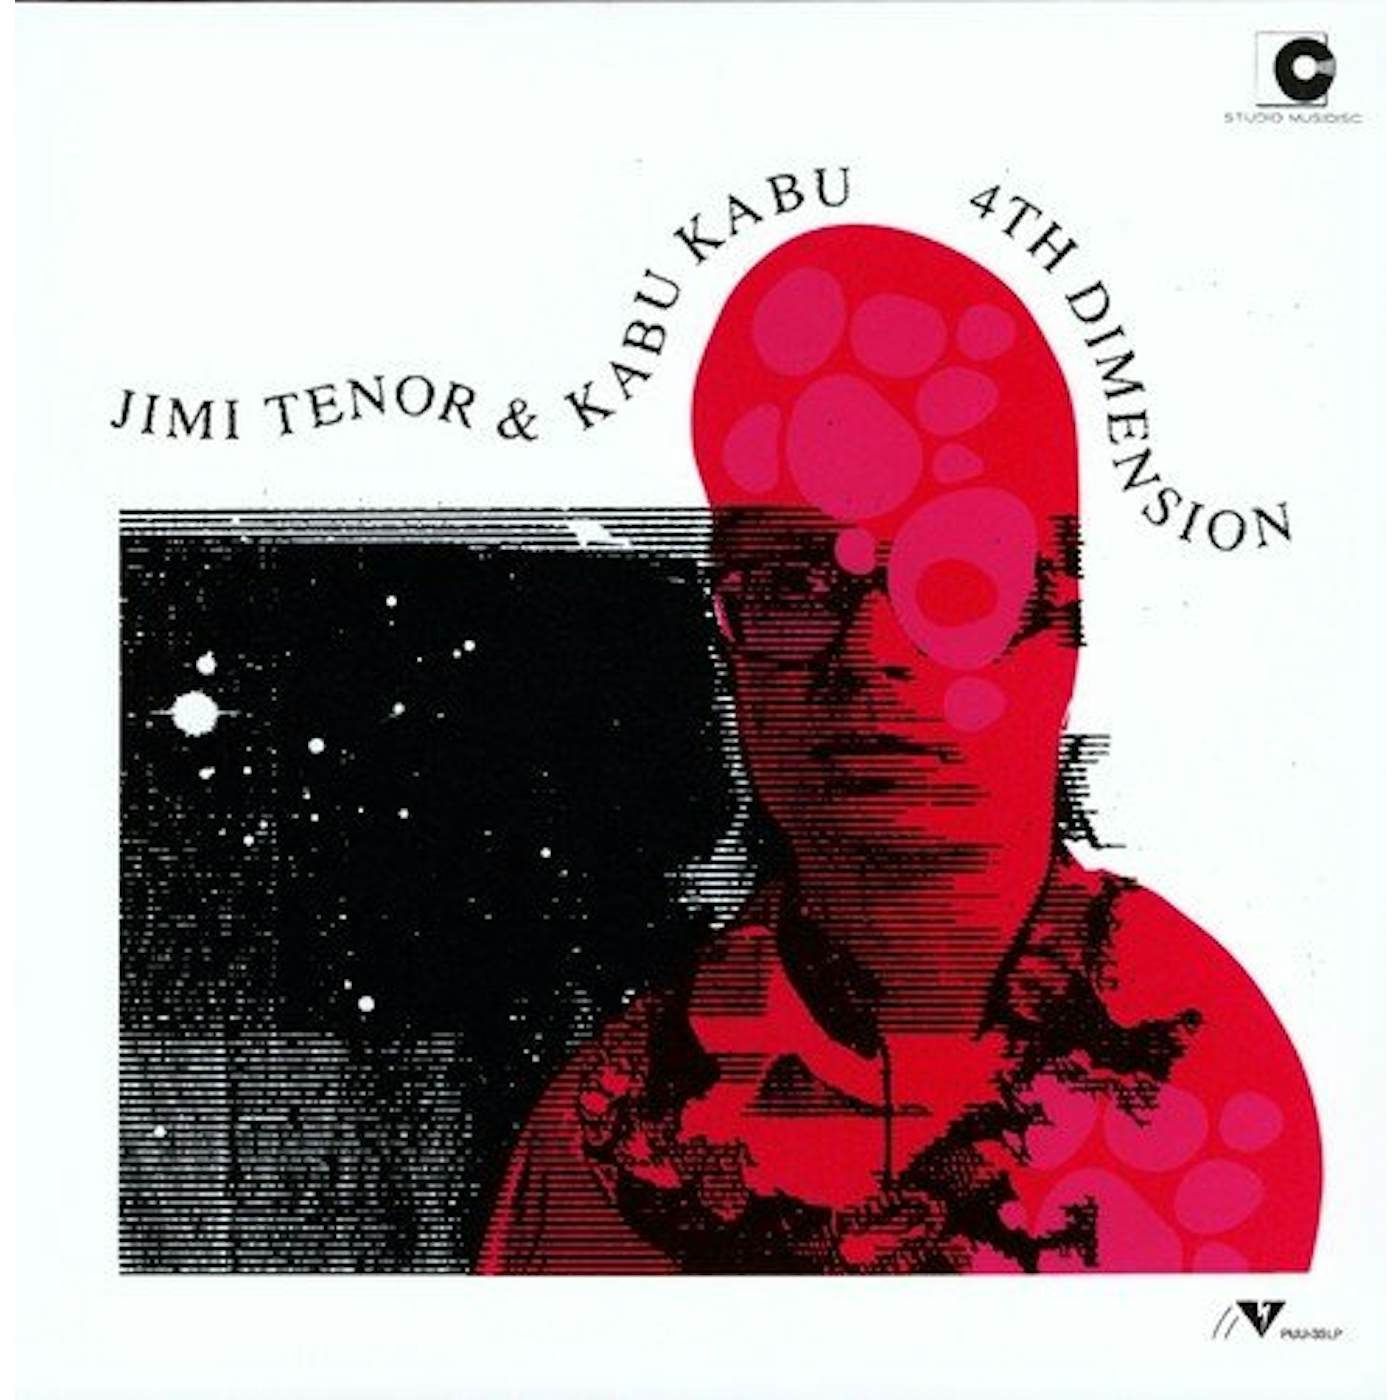 jimi tenor & kabu kabu 4th Dimension Vinyl Record